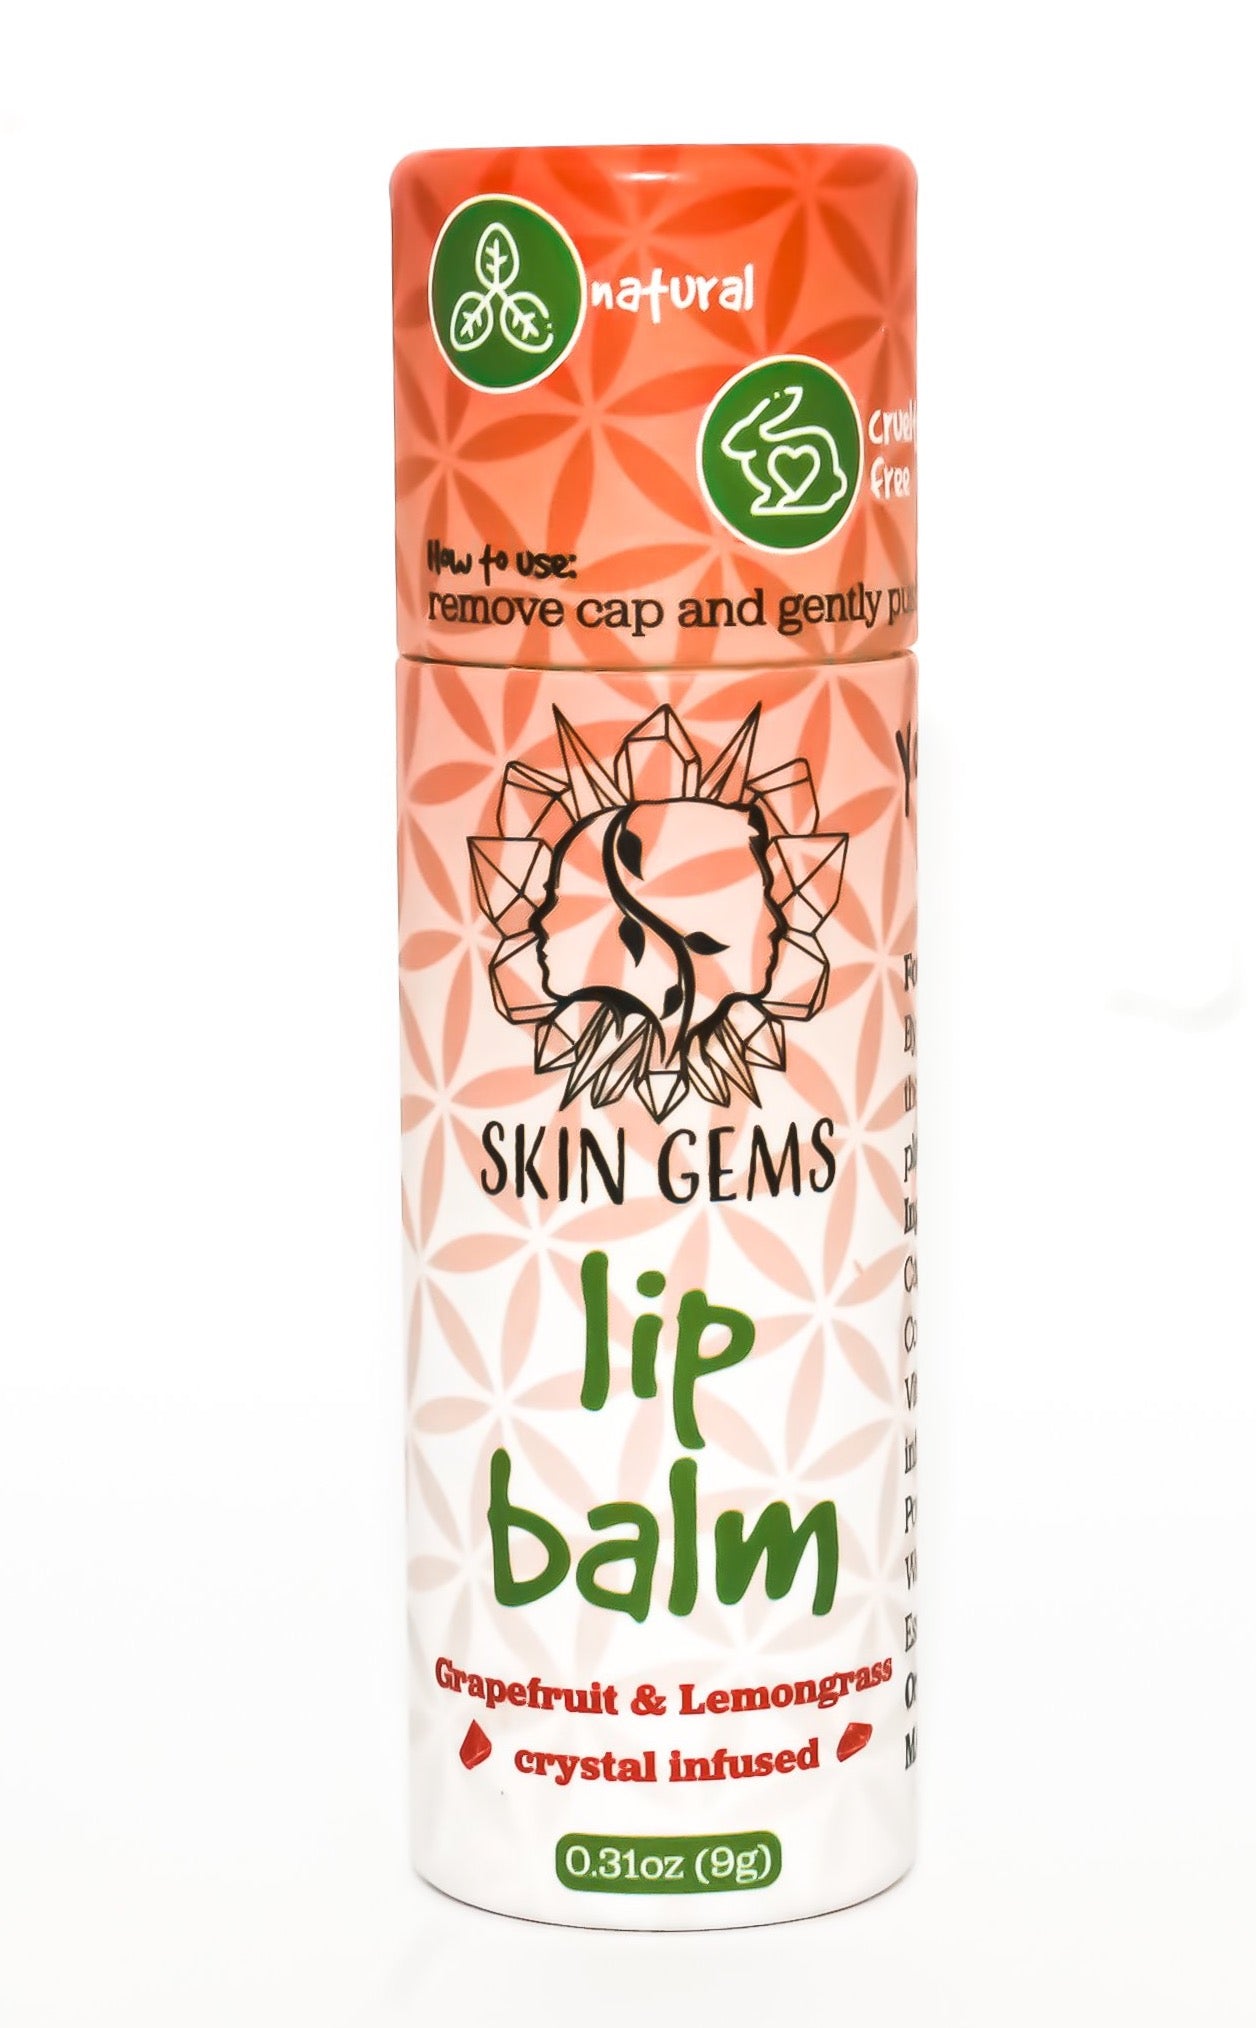 Grapefruit and Lemongrass Lip Balm SPF 15